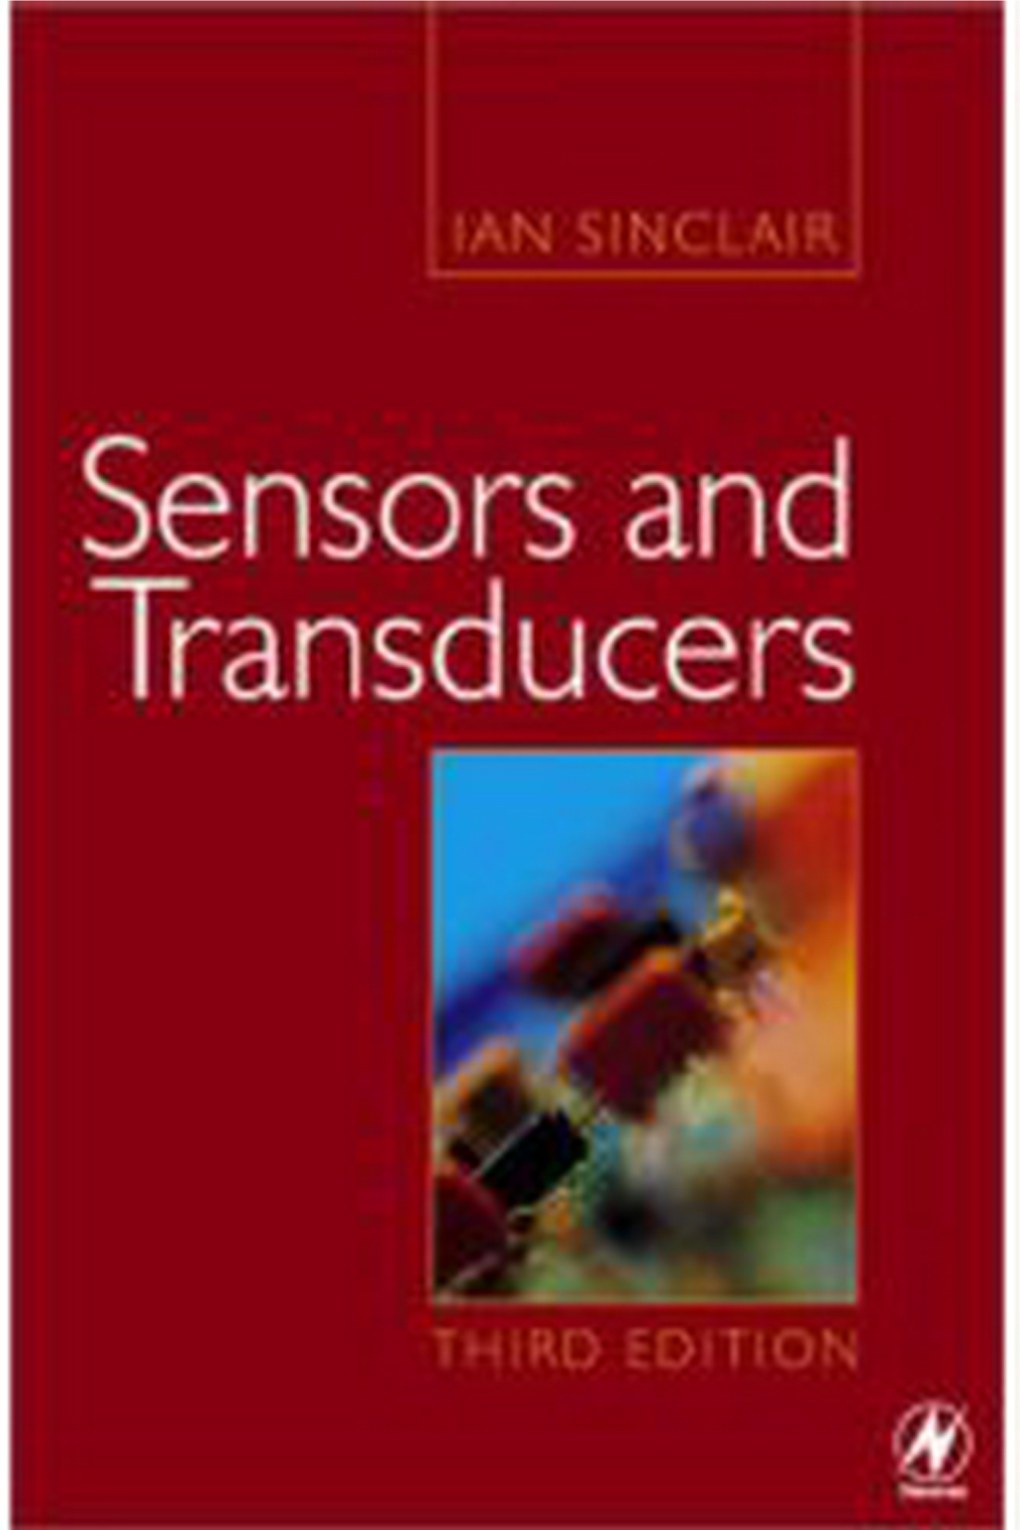 Sensors and Transducers Third Edition